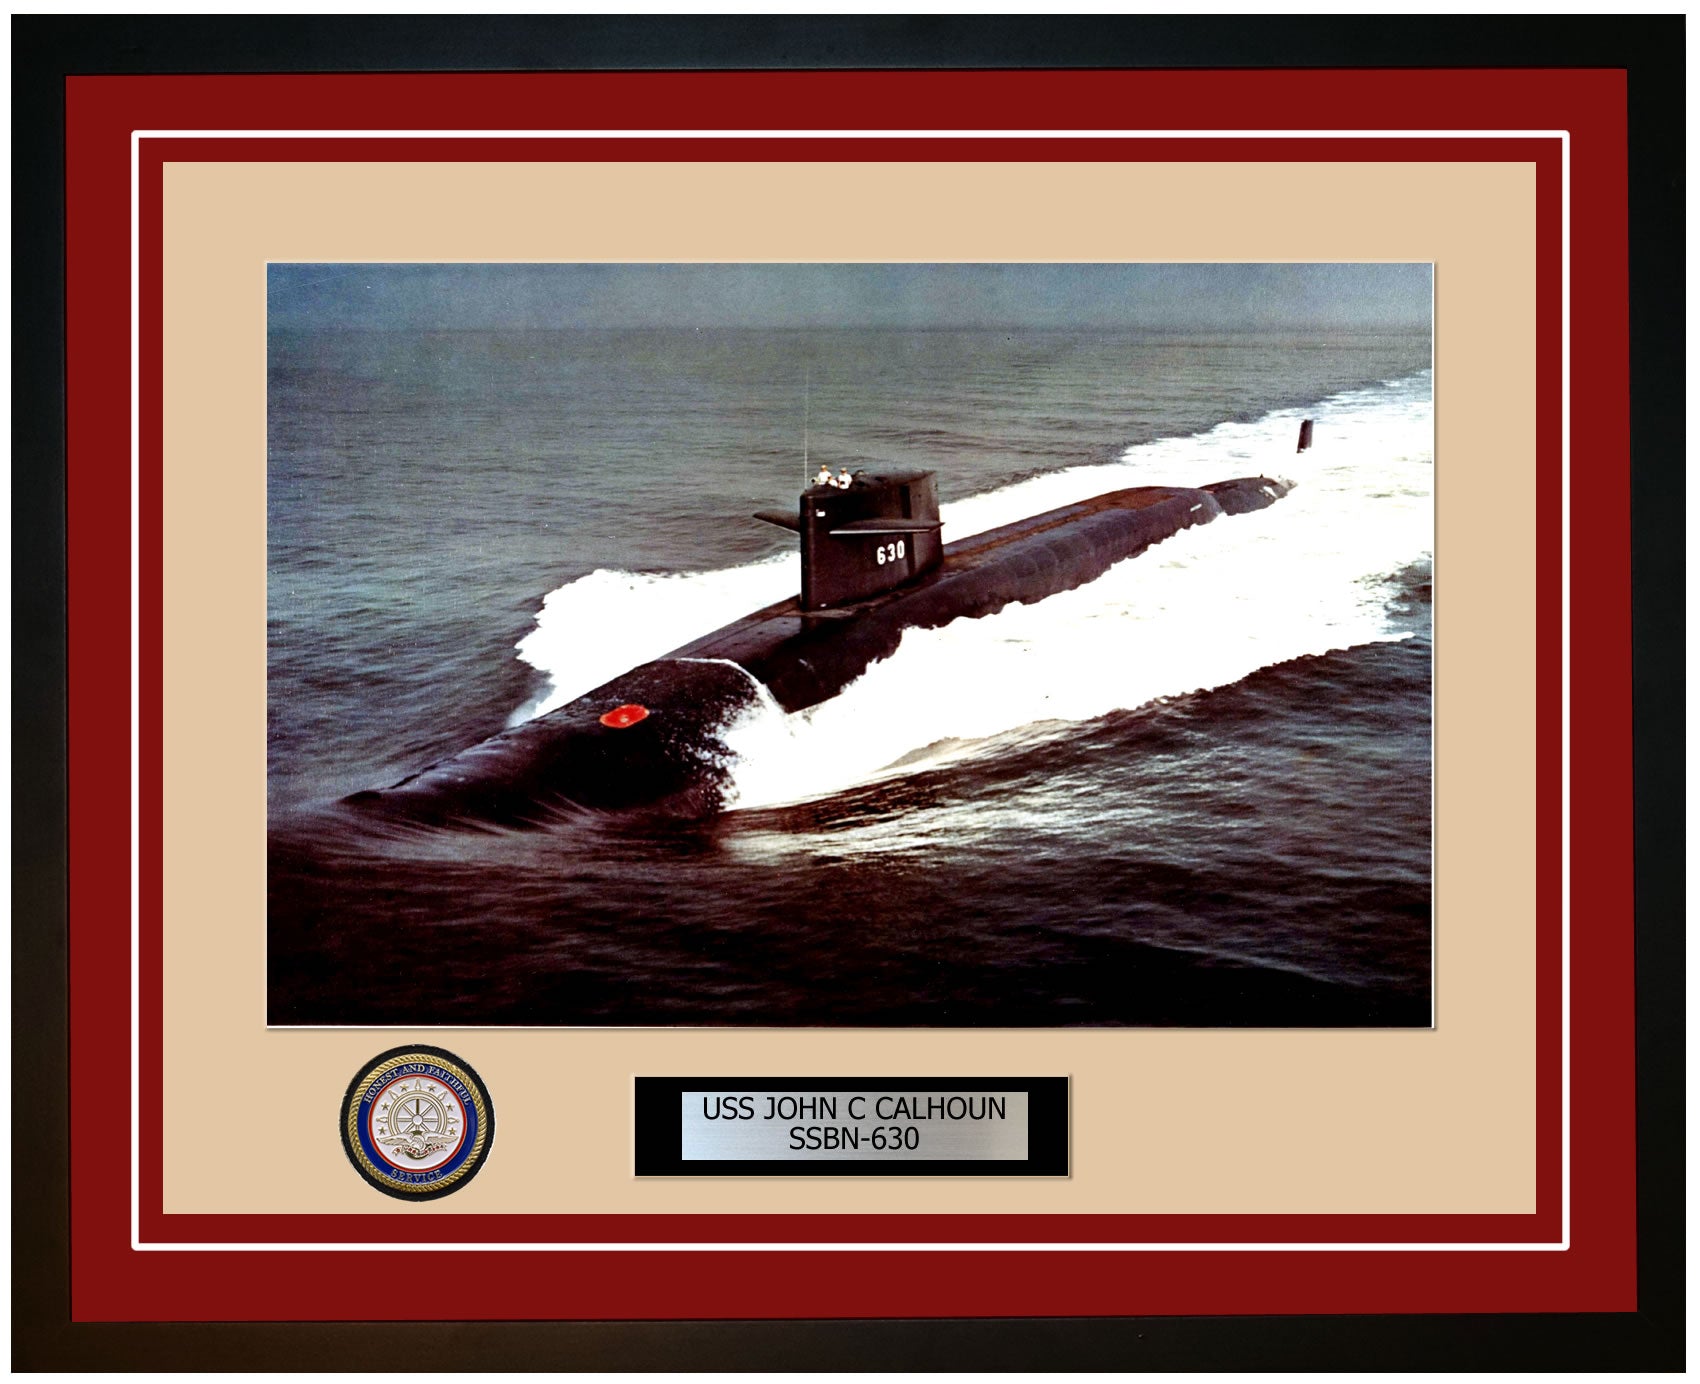 USS John C Calhoun SSBN-630 Framed Navy Ship Photo Burgundy